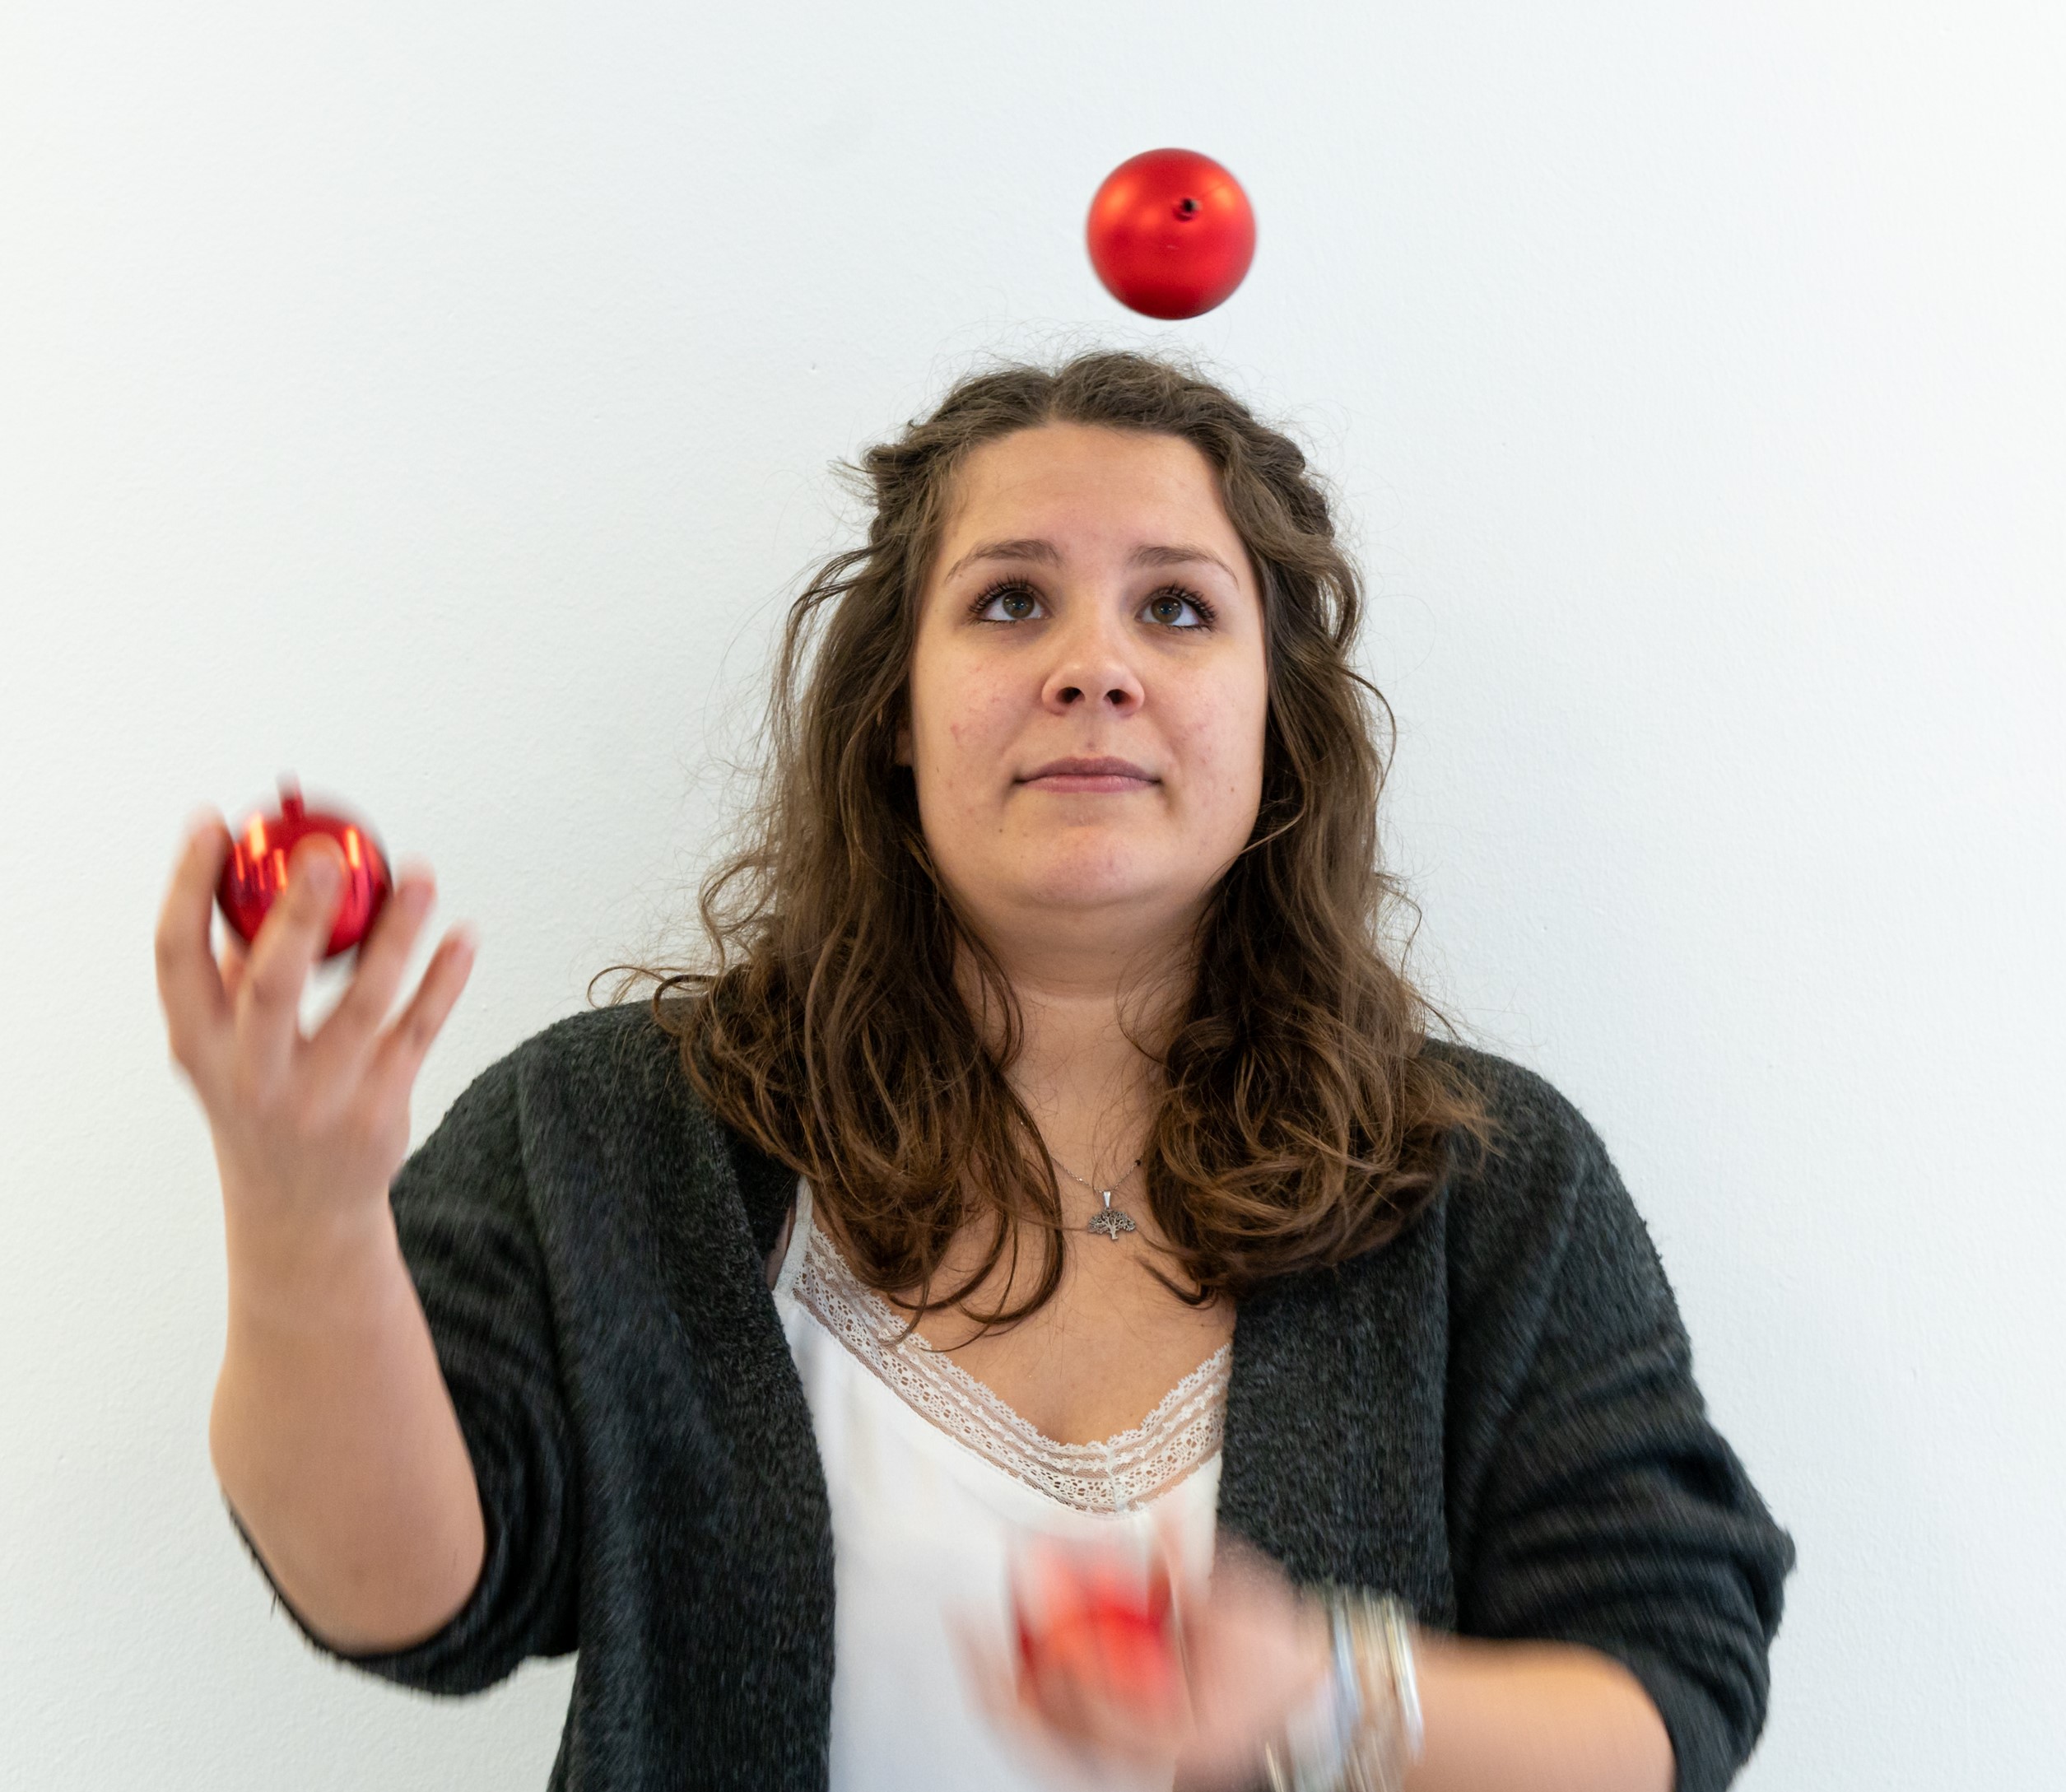 Frau jongliert mit drei roten Weihnachtskugeln.